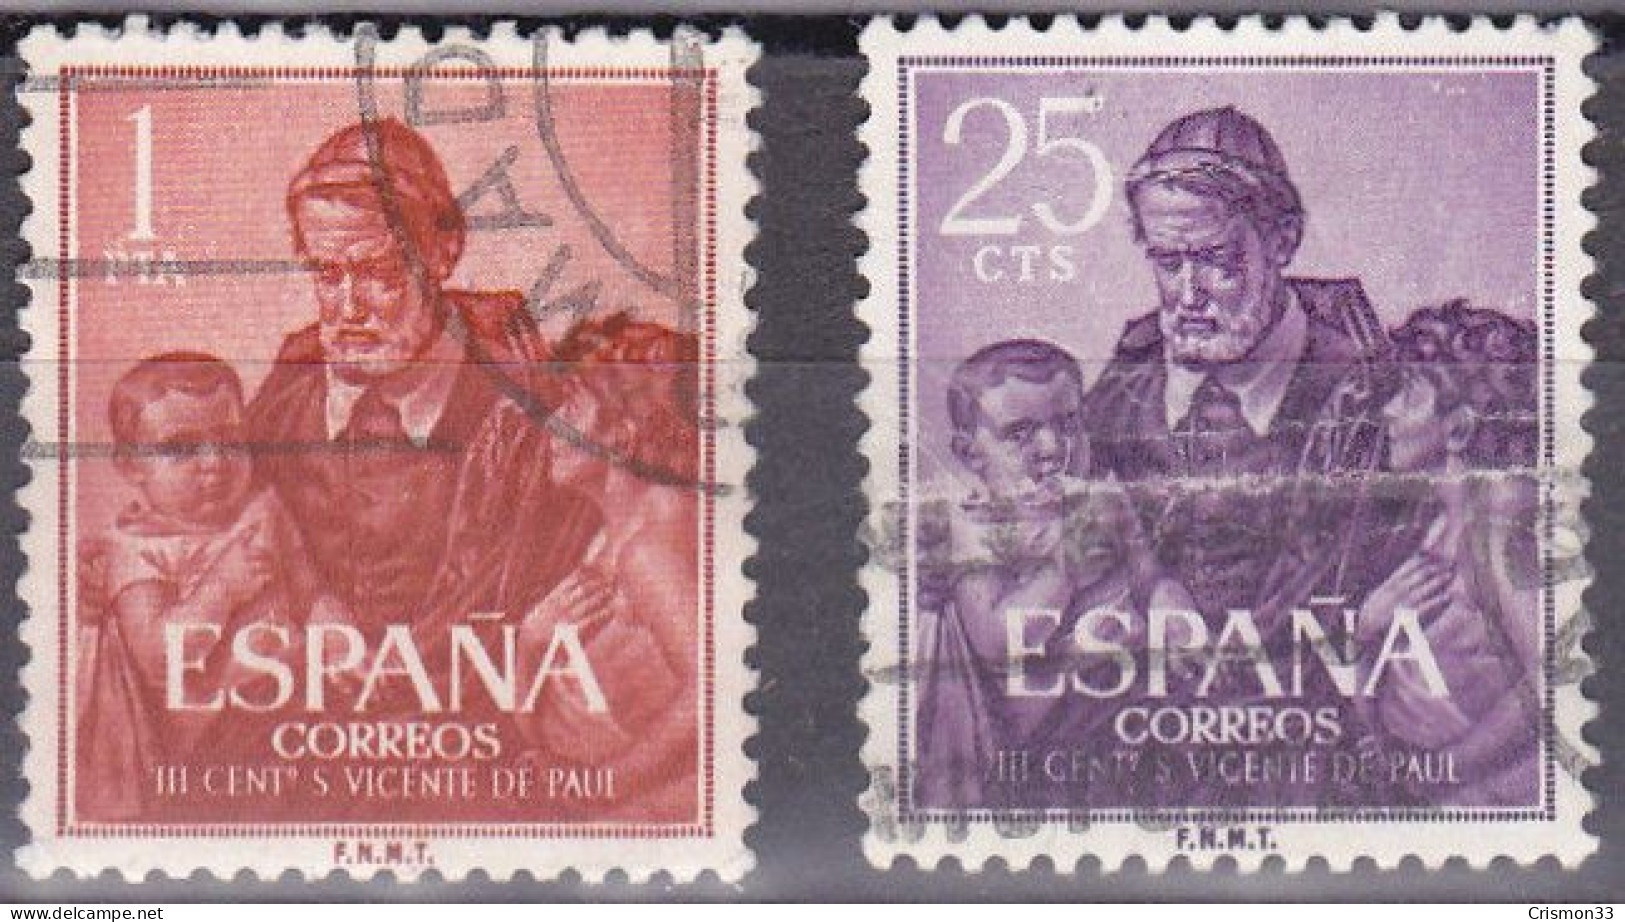 1960 - ESPAÑA - III CENTENARIO DE LA MUERTE DE SAN VICENTE FERRER - EDIFIL 1296,1297 - SERIE COMPLETA - Used Stamps